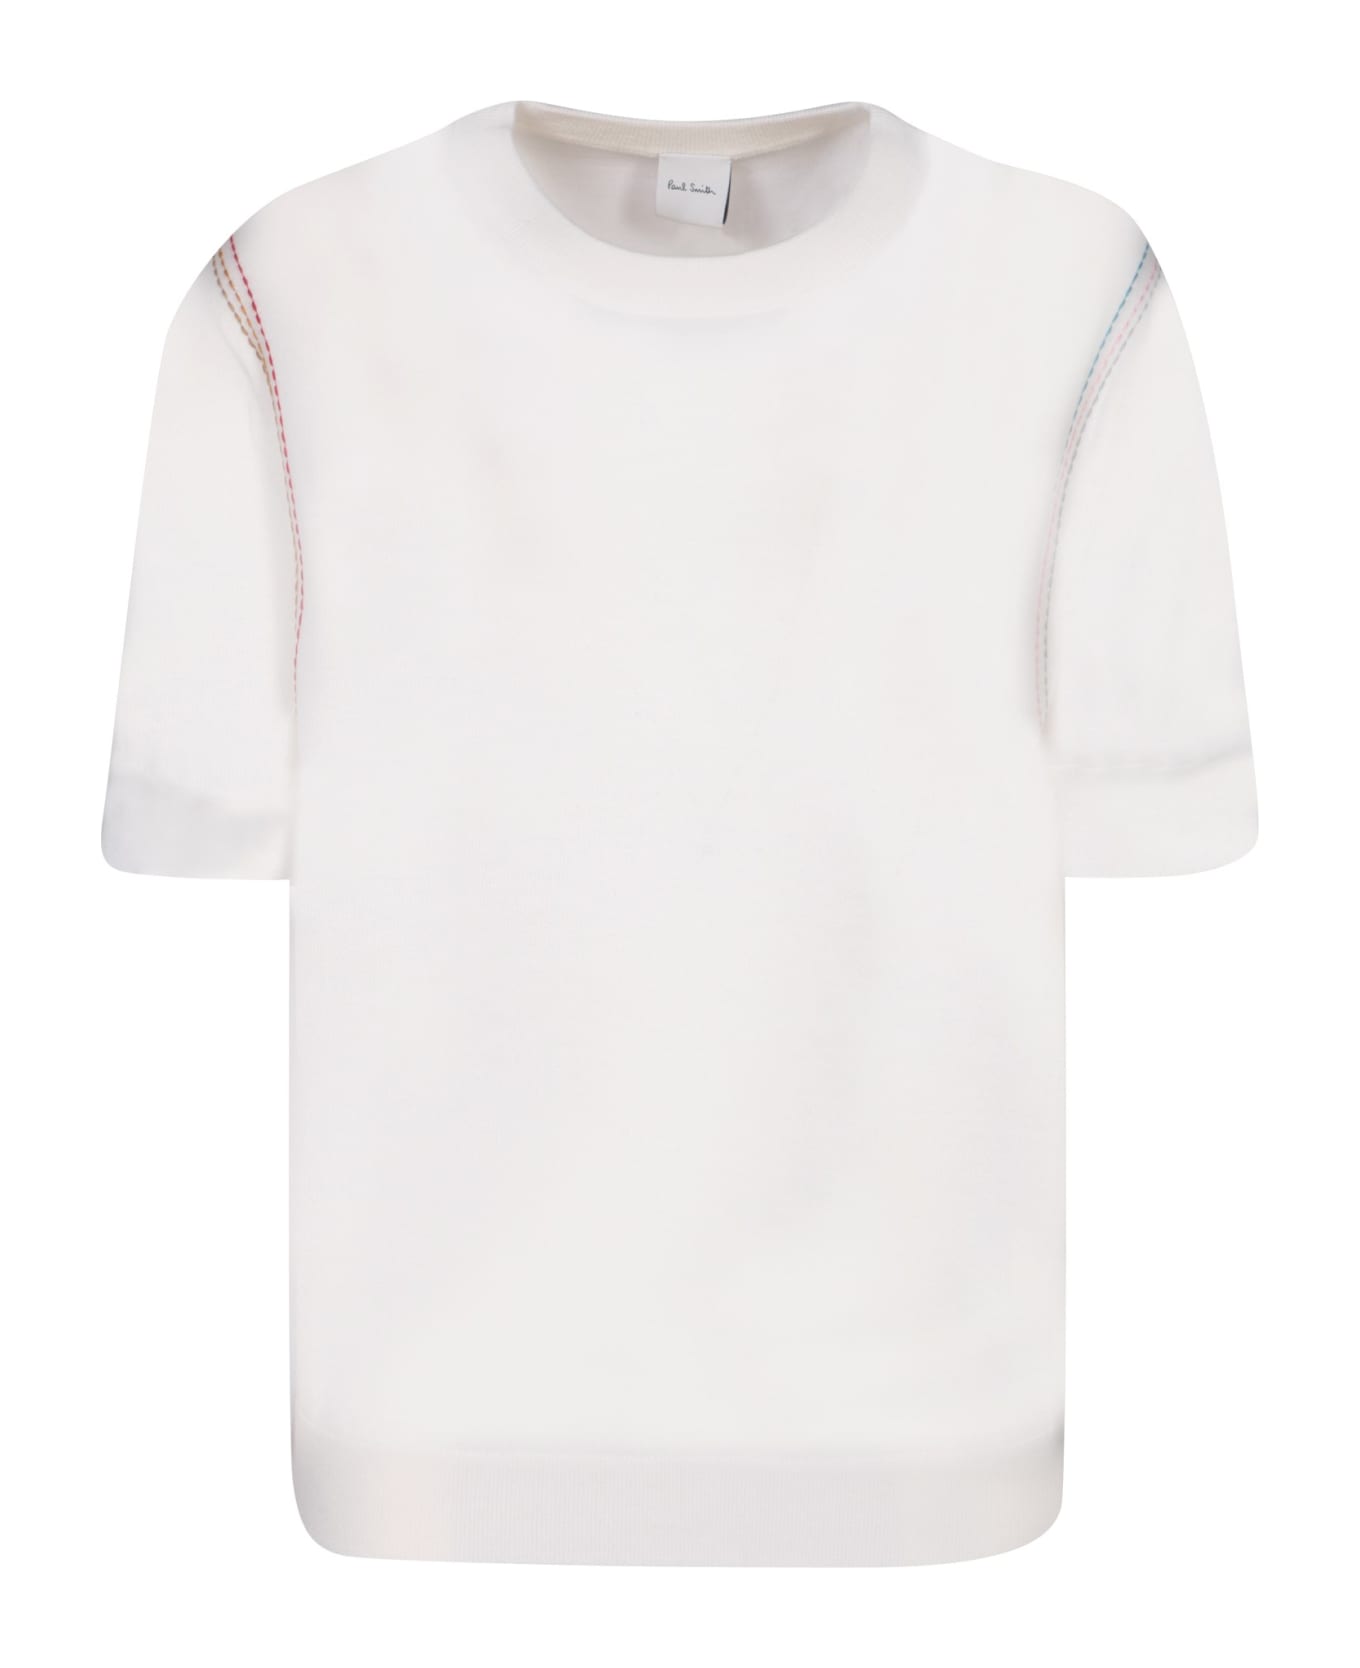 Paul Smith Short Sleeves White T-shirt - White